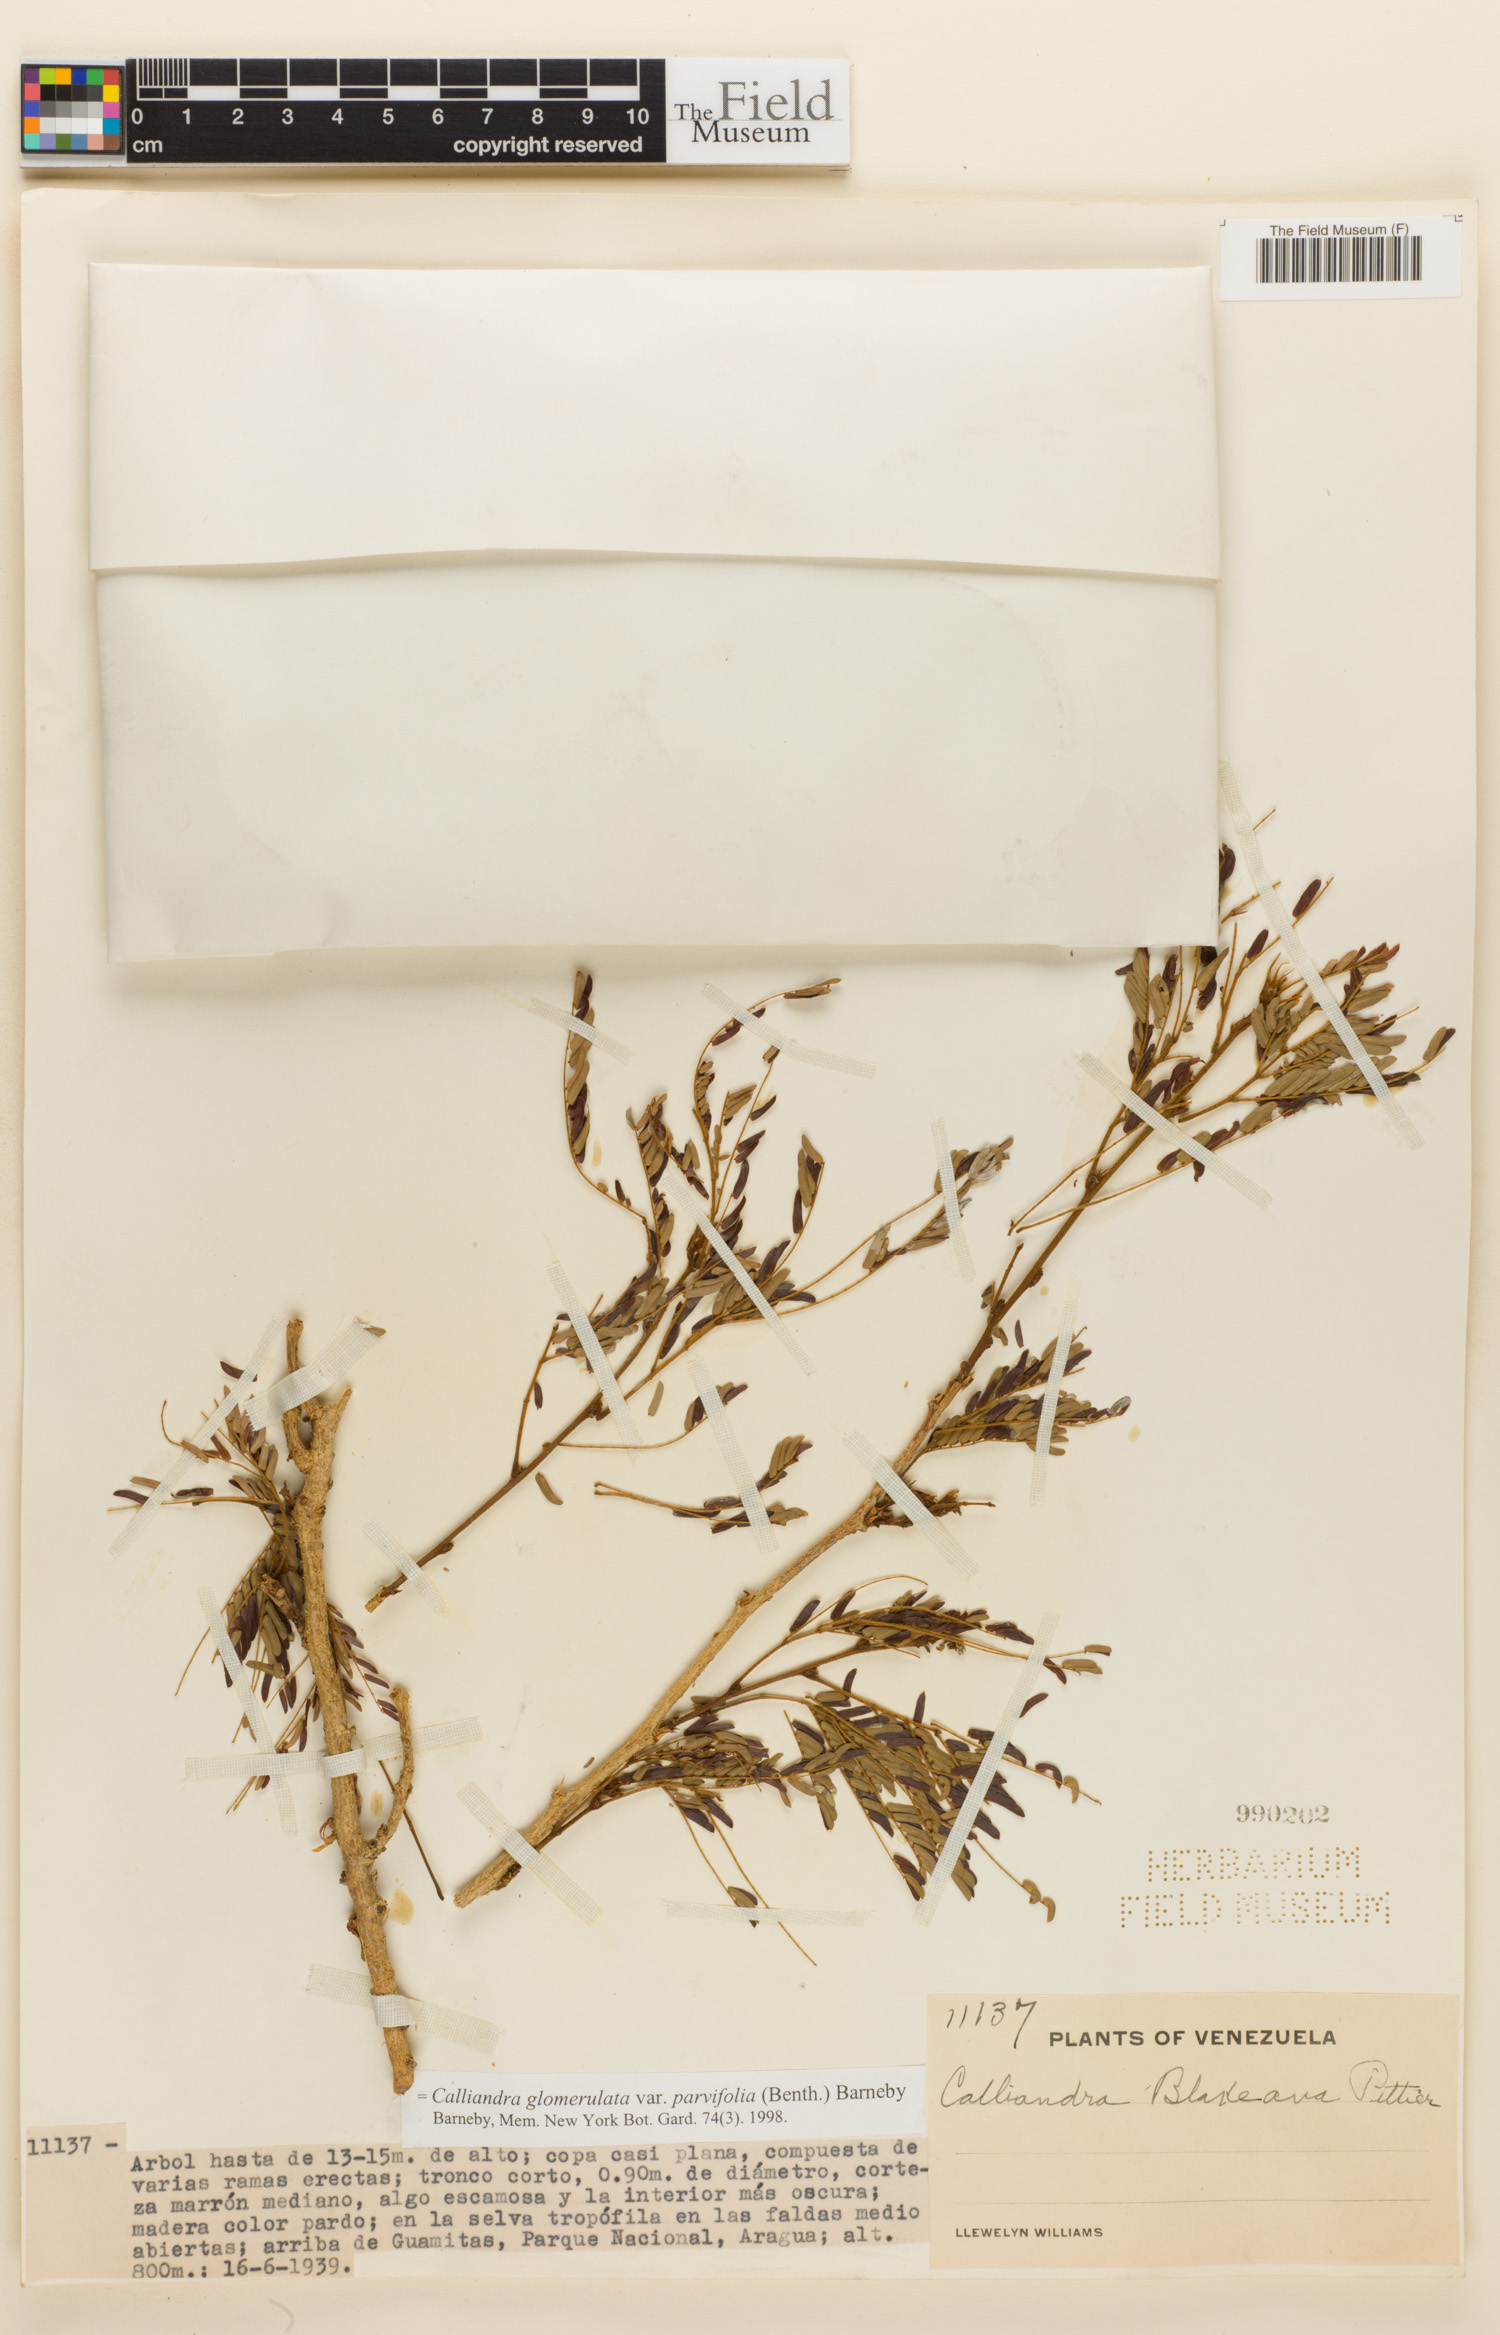 Calliandra glomerulata var. parvifolia image